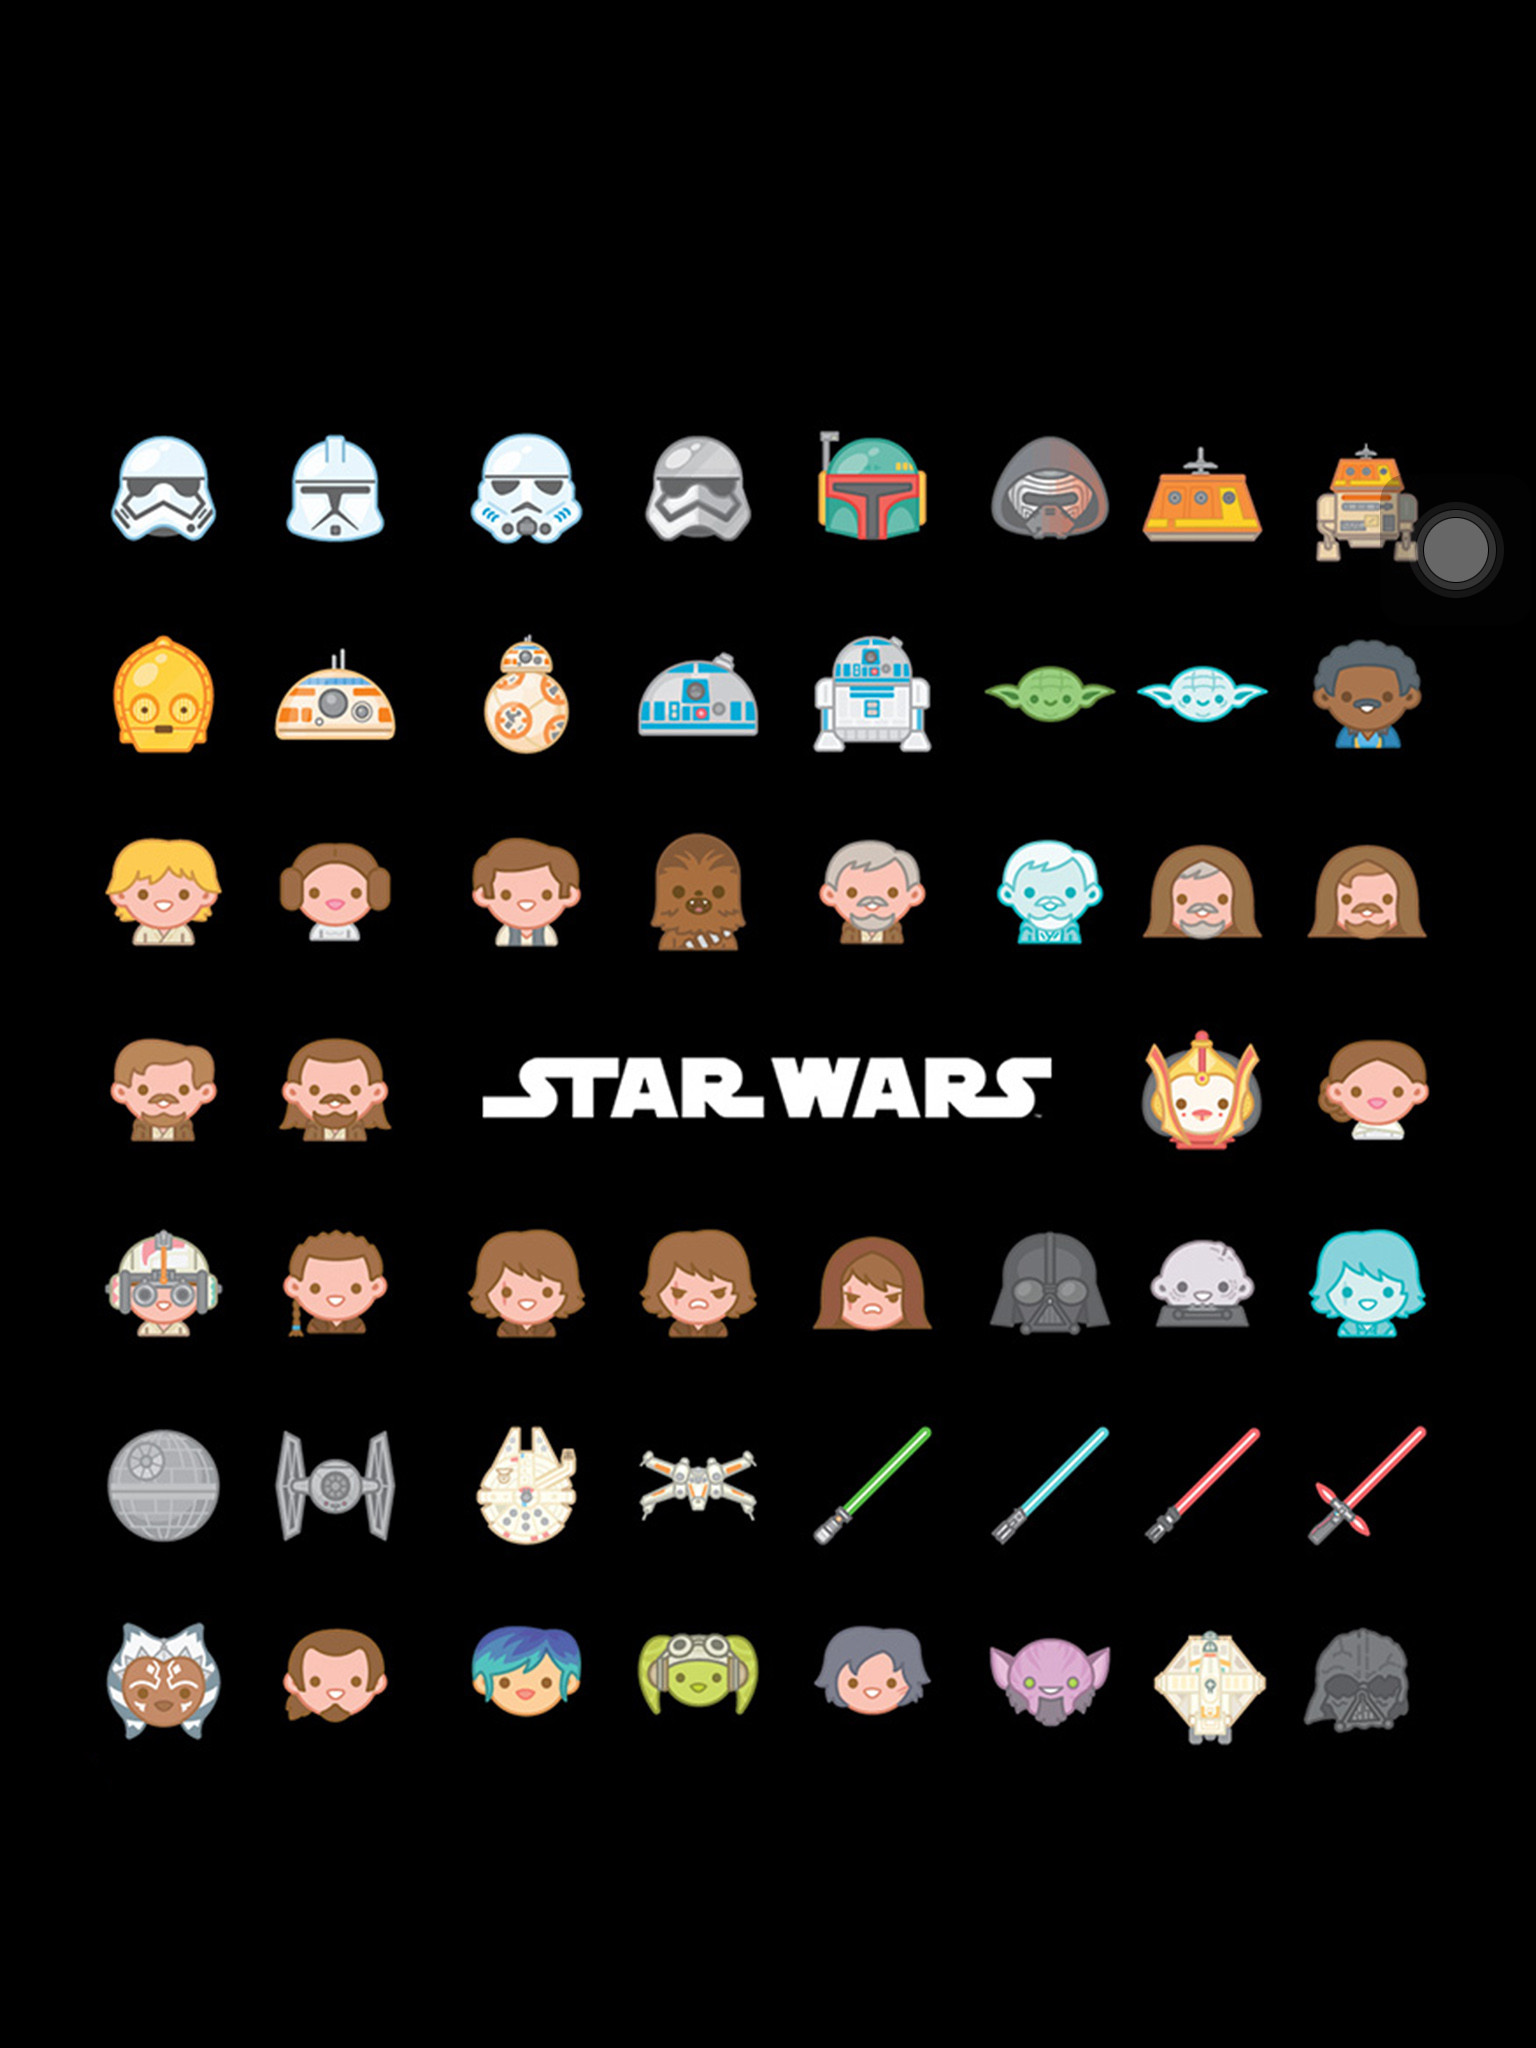 Star Wars emoji background Follow me for more